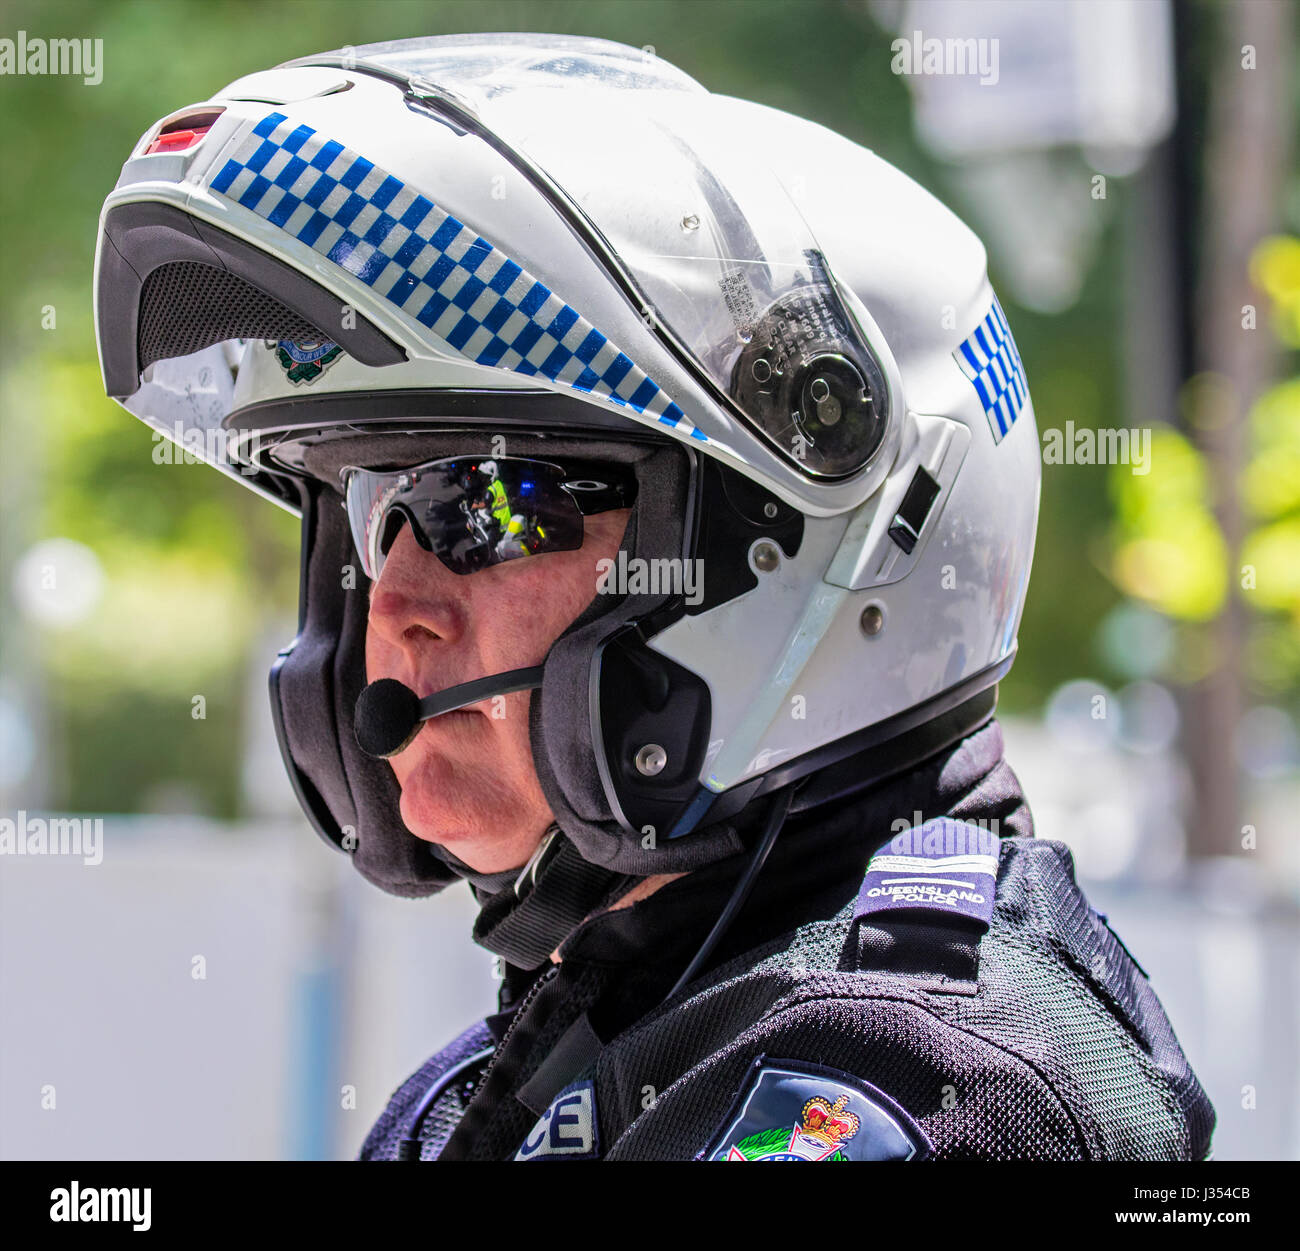 Police motorcycle helmet -Fotos und -Bildmaterial in hoher Auflösung – Alamy